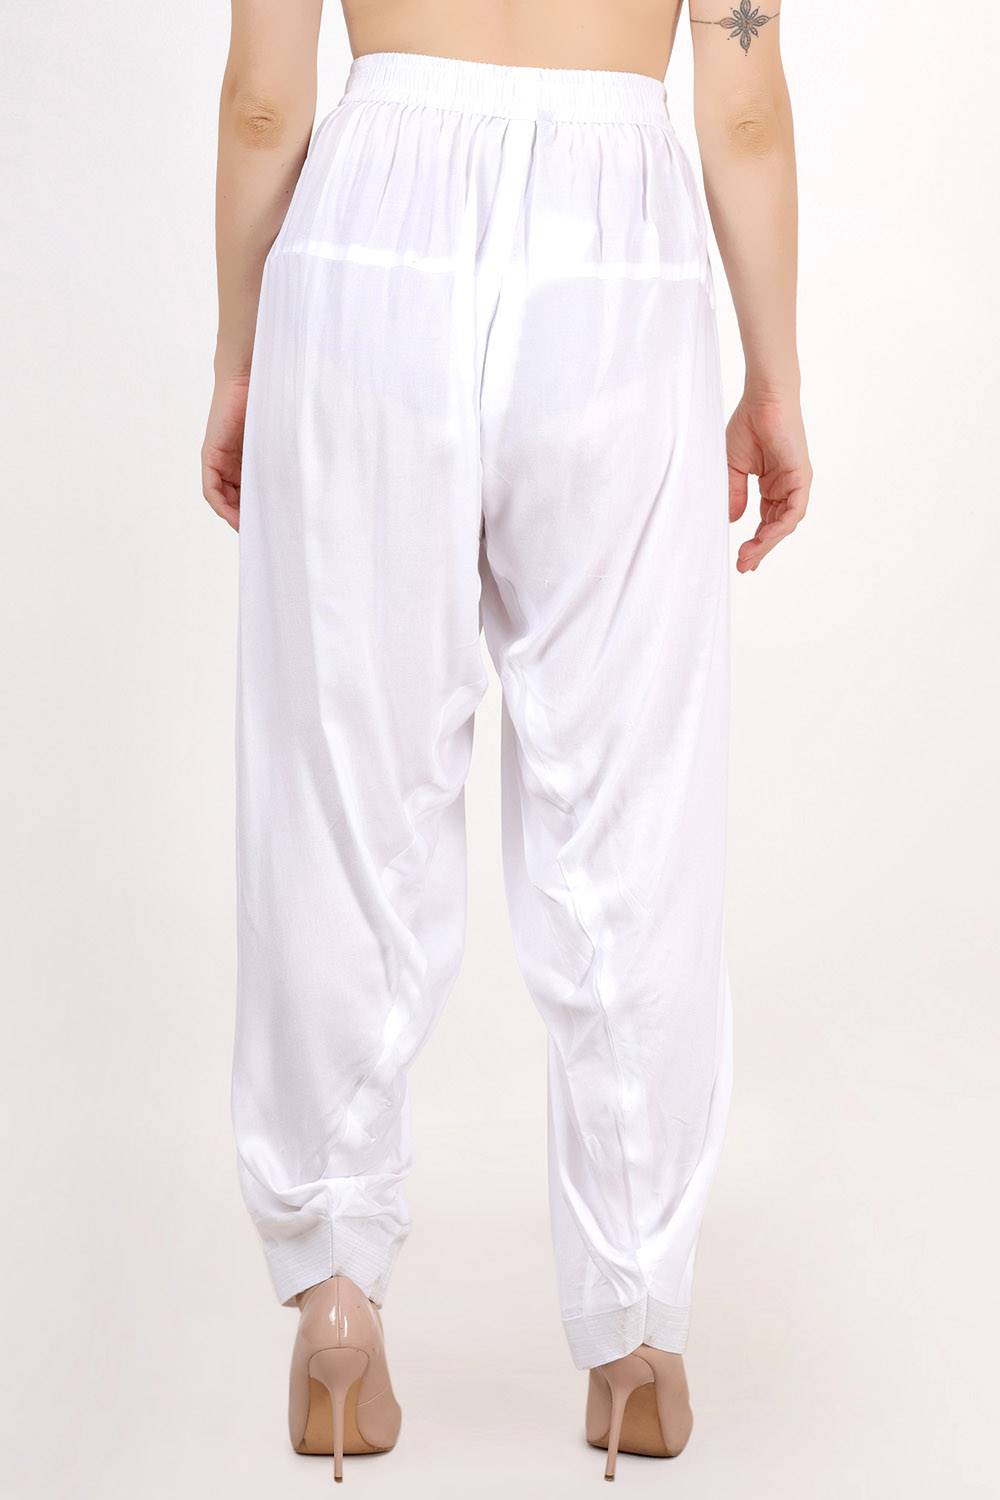 W Dark Purple Solid Salwar Pants SizeXL  21MAF61171920111 in  Pathankot at best price by Libaas Hub  Justdial